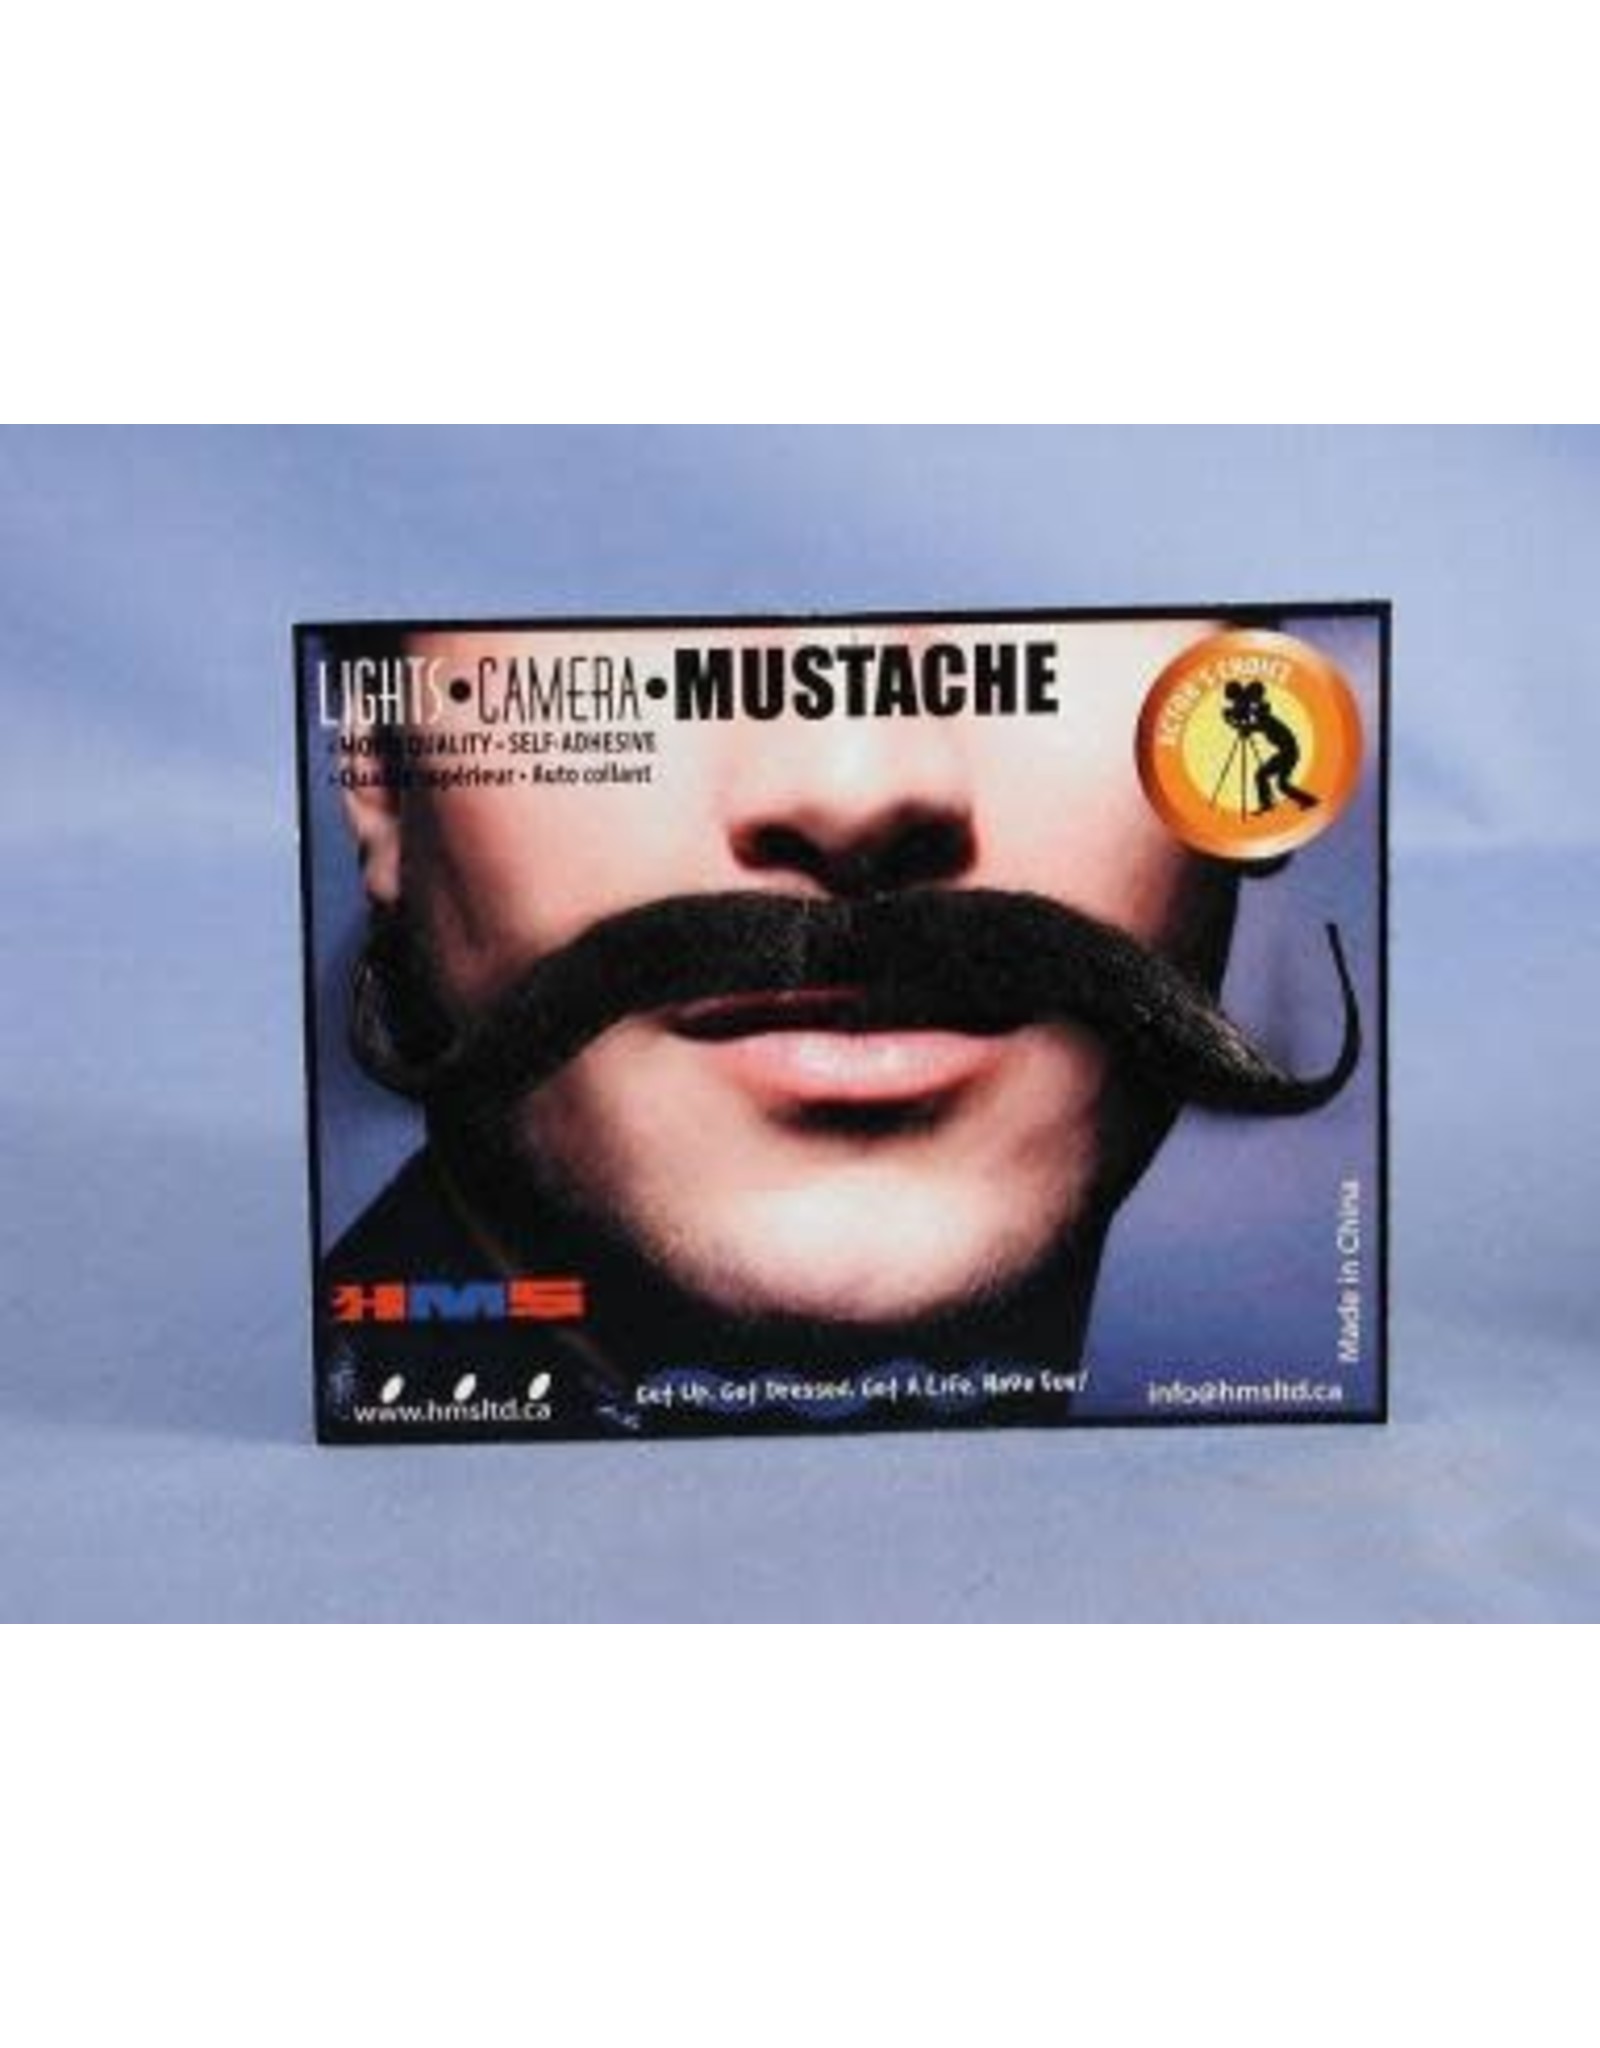 HM Smallwares Muskateers Mustache